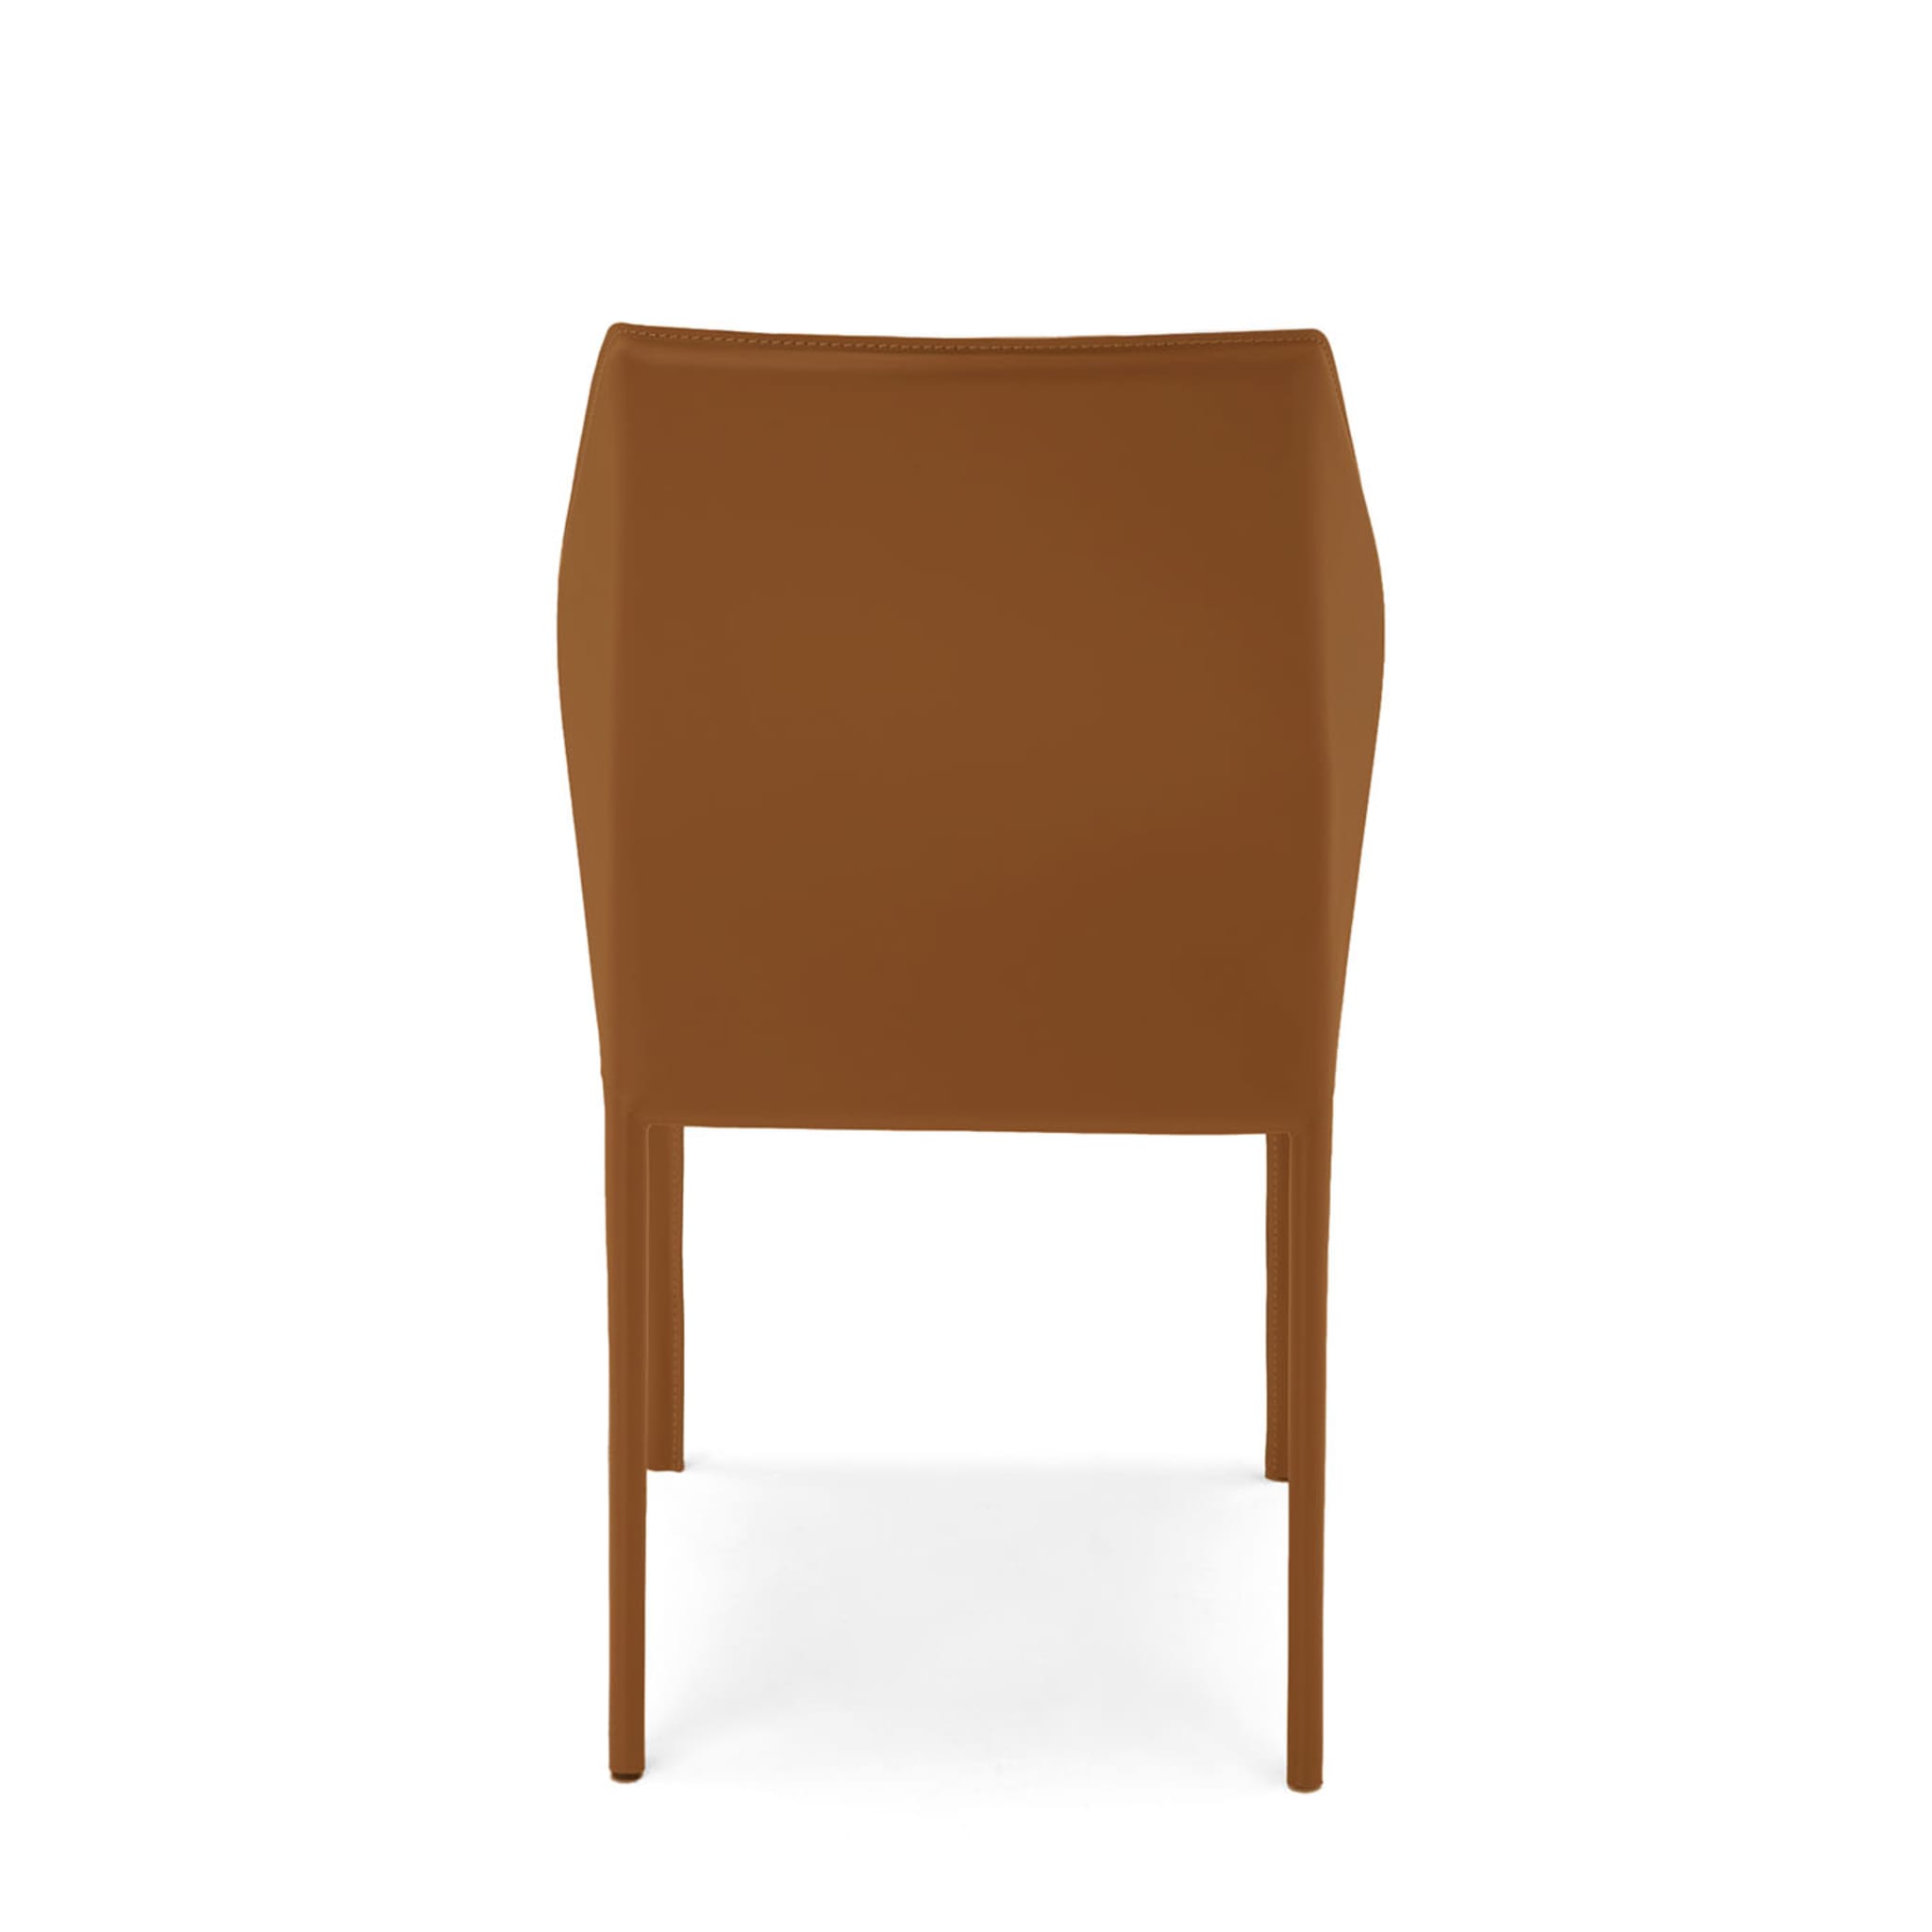 Set of 2 Fold Chair #1 - Alternative view 2